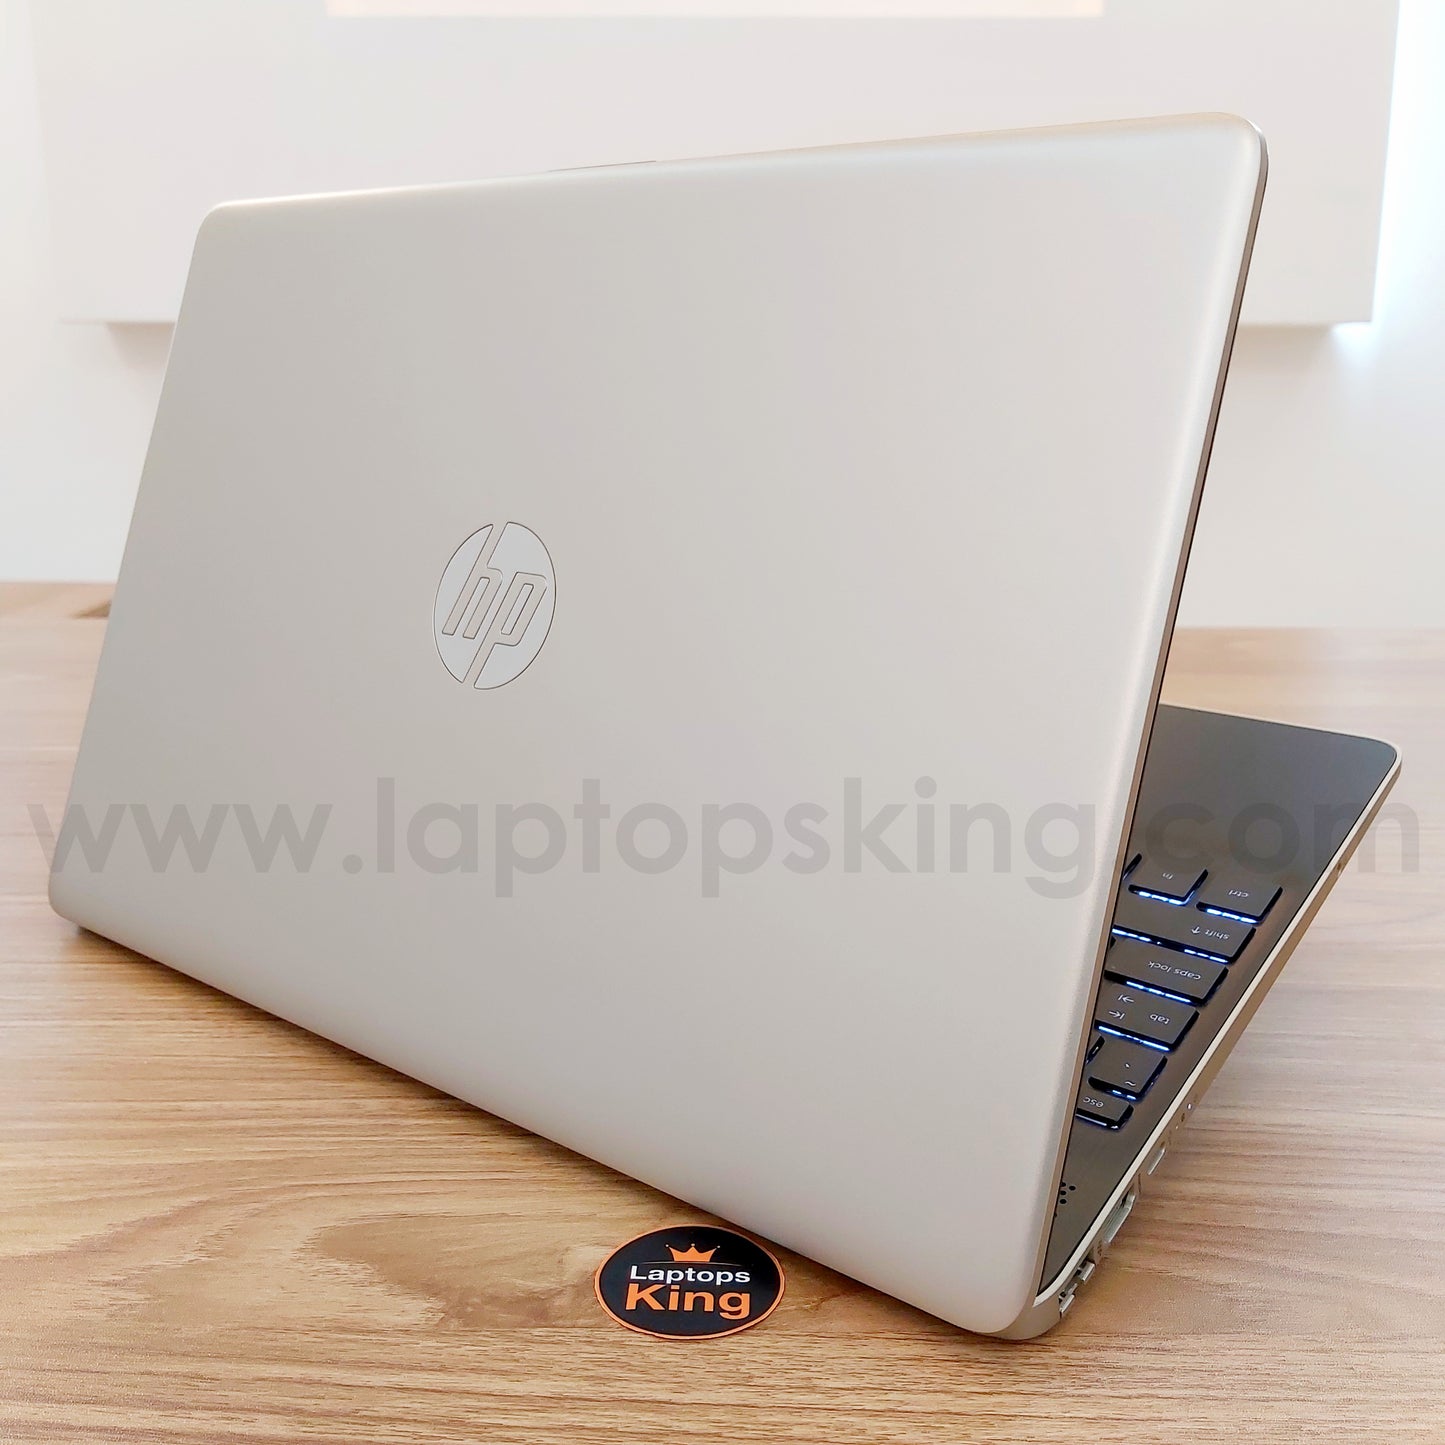 HP 15-Dw1 i7-10510u Laptop Offer (New Open Box)